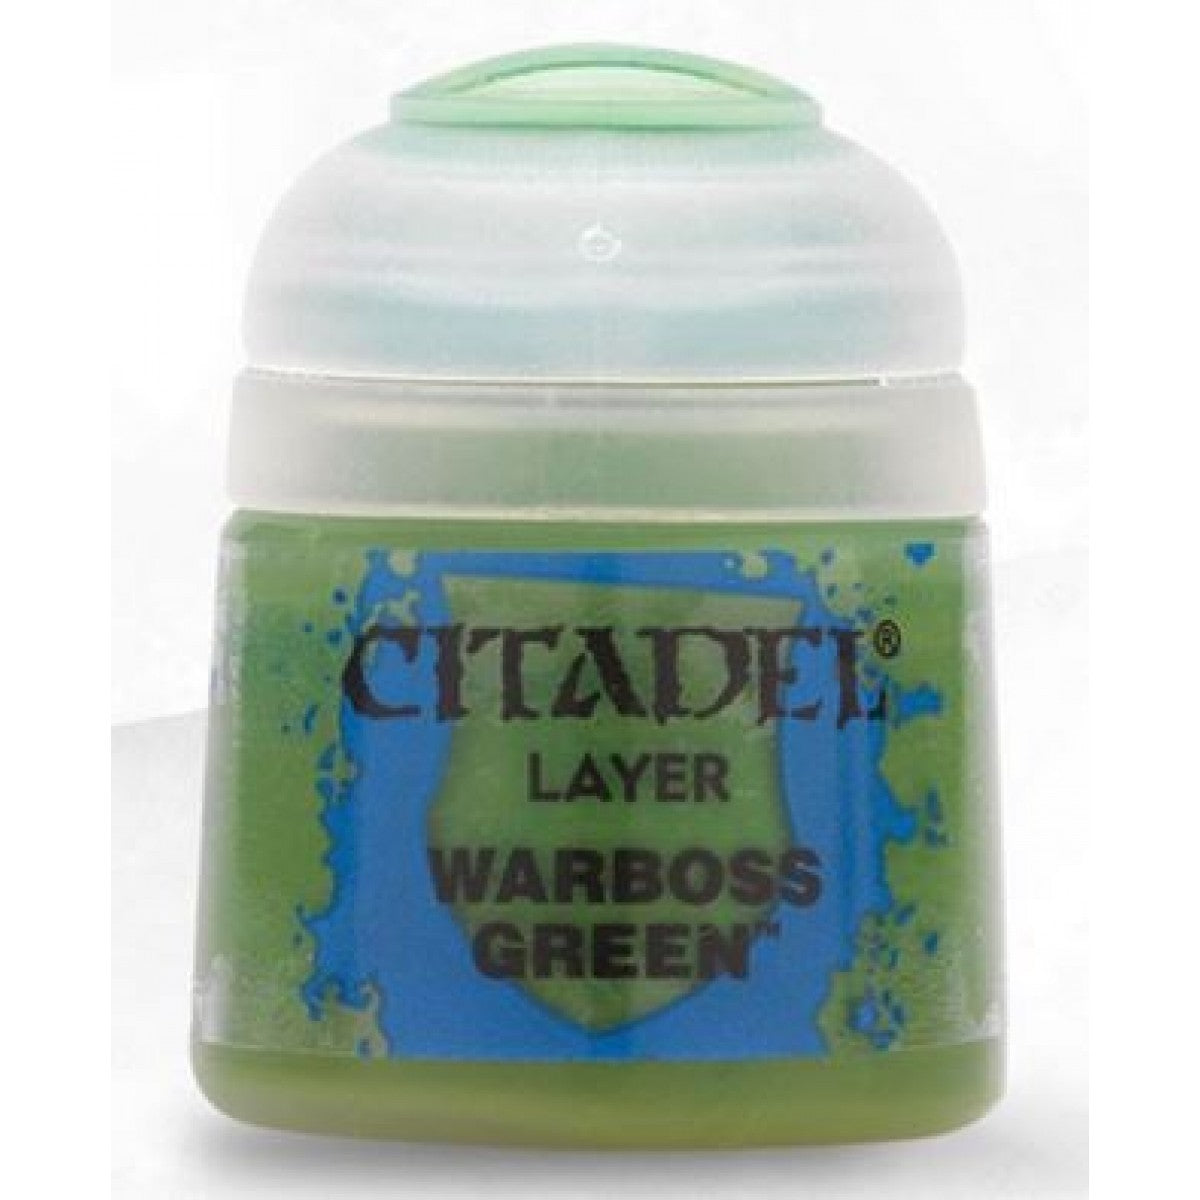 Citadel Layer Paint - Warboss Green 12ml (22-25)